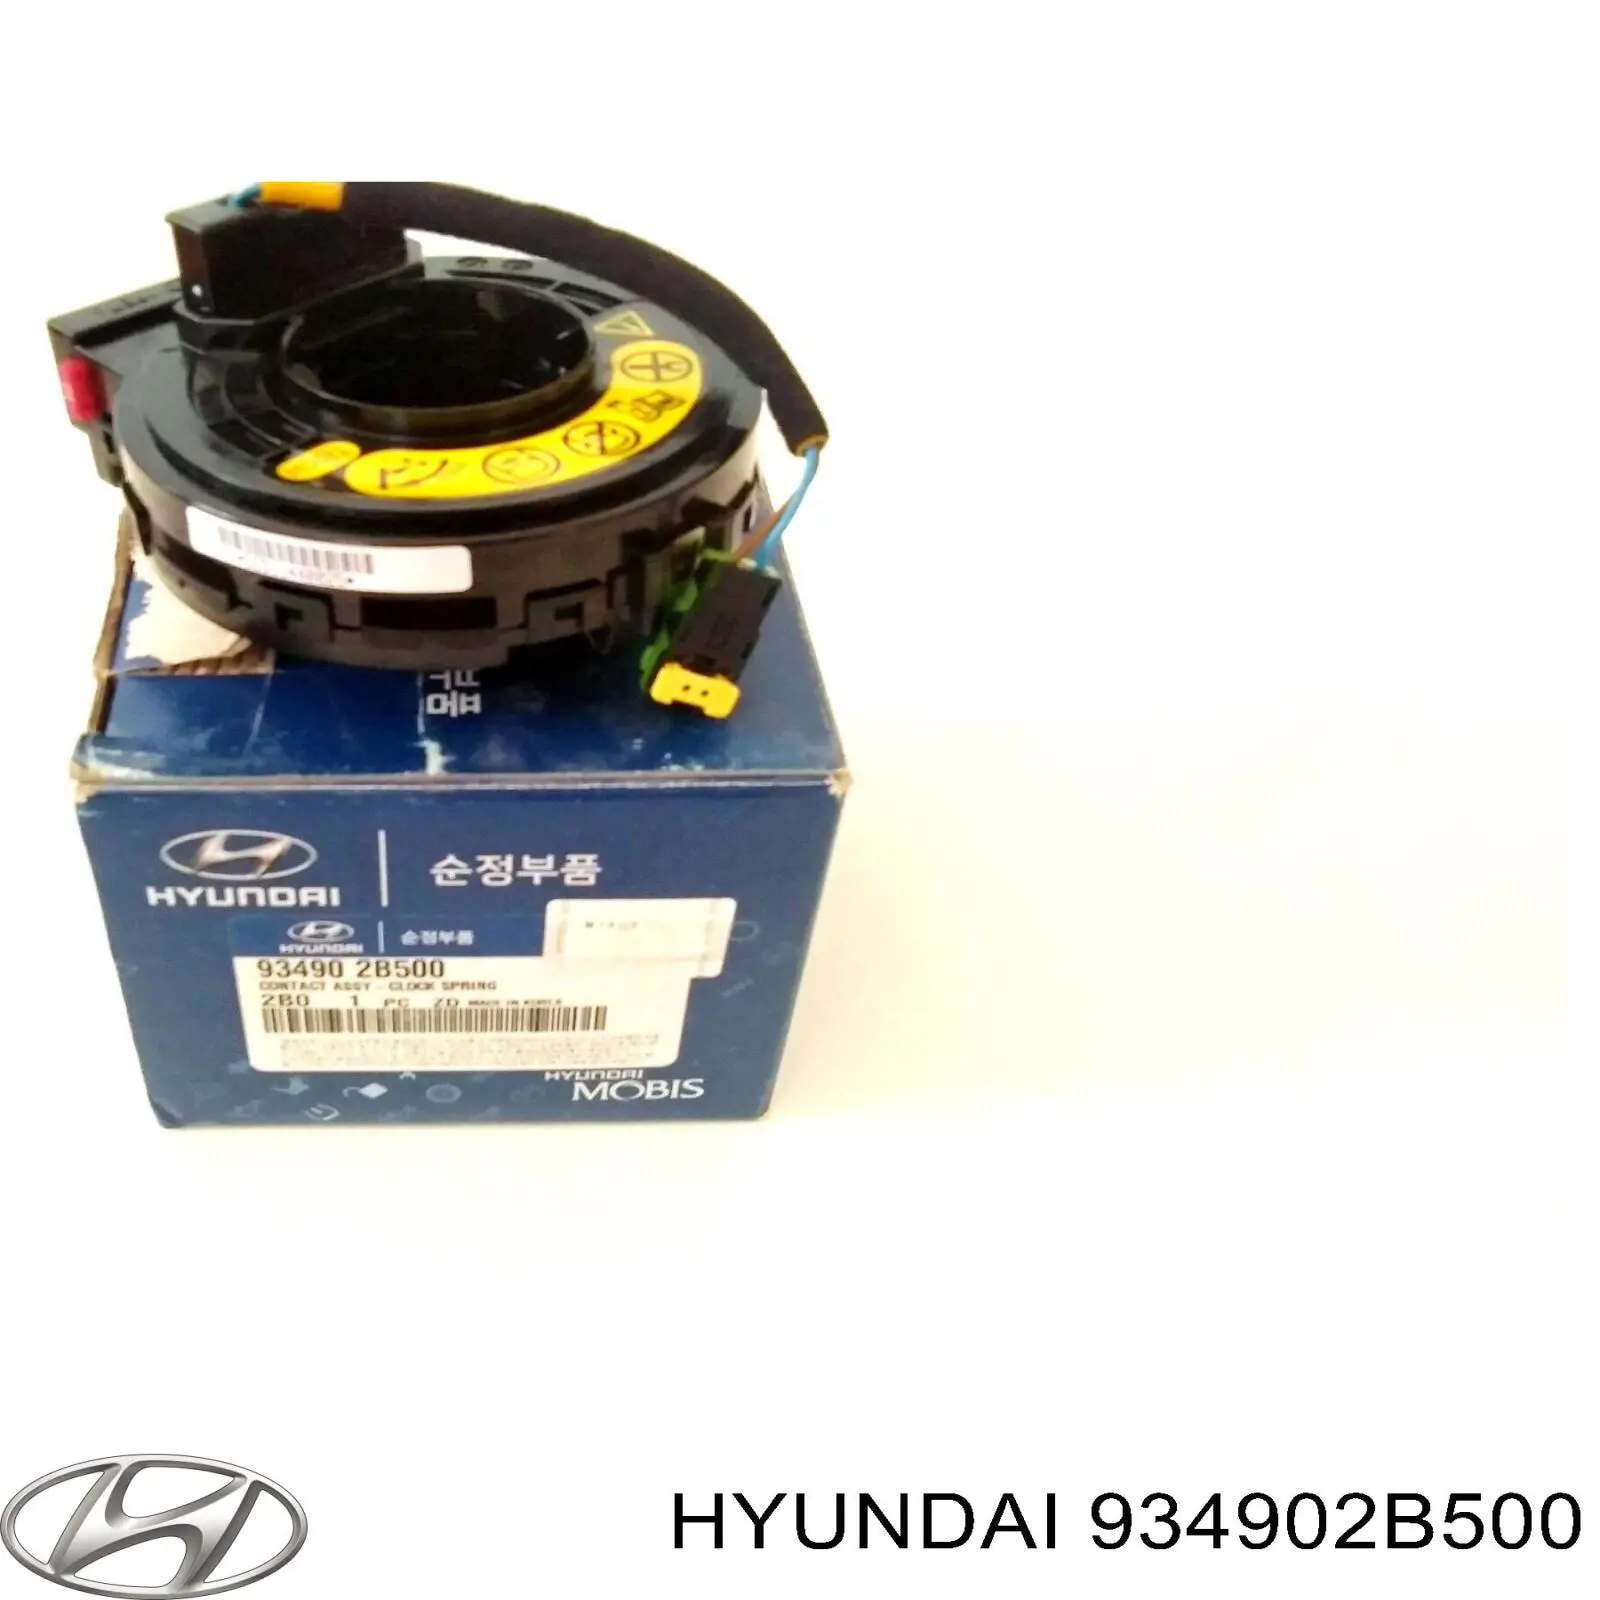 934902B500 Hyundai/Kia anel airbag de contato, cabo plano do volante